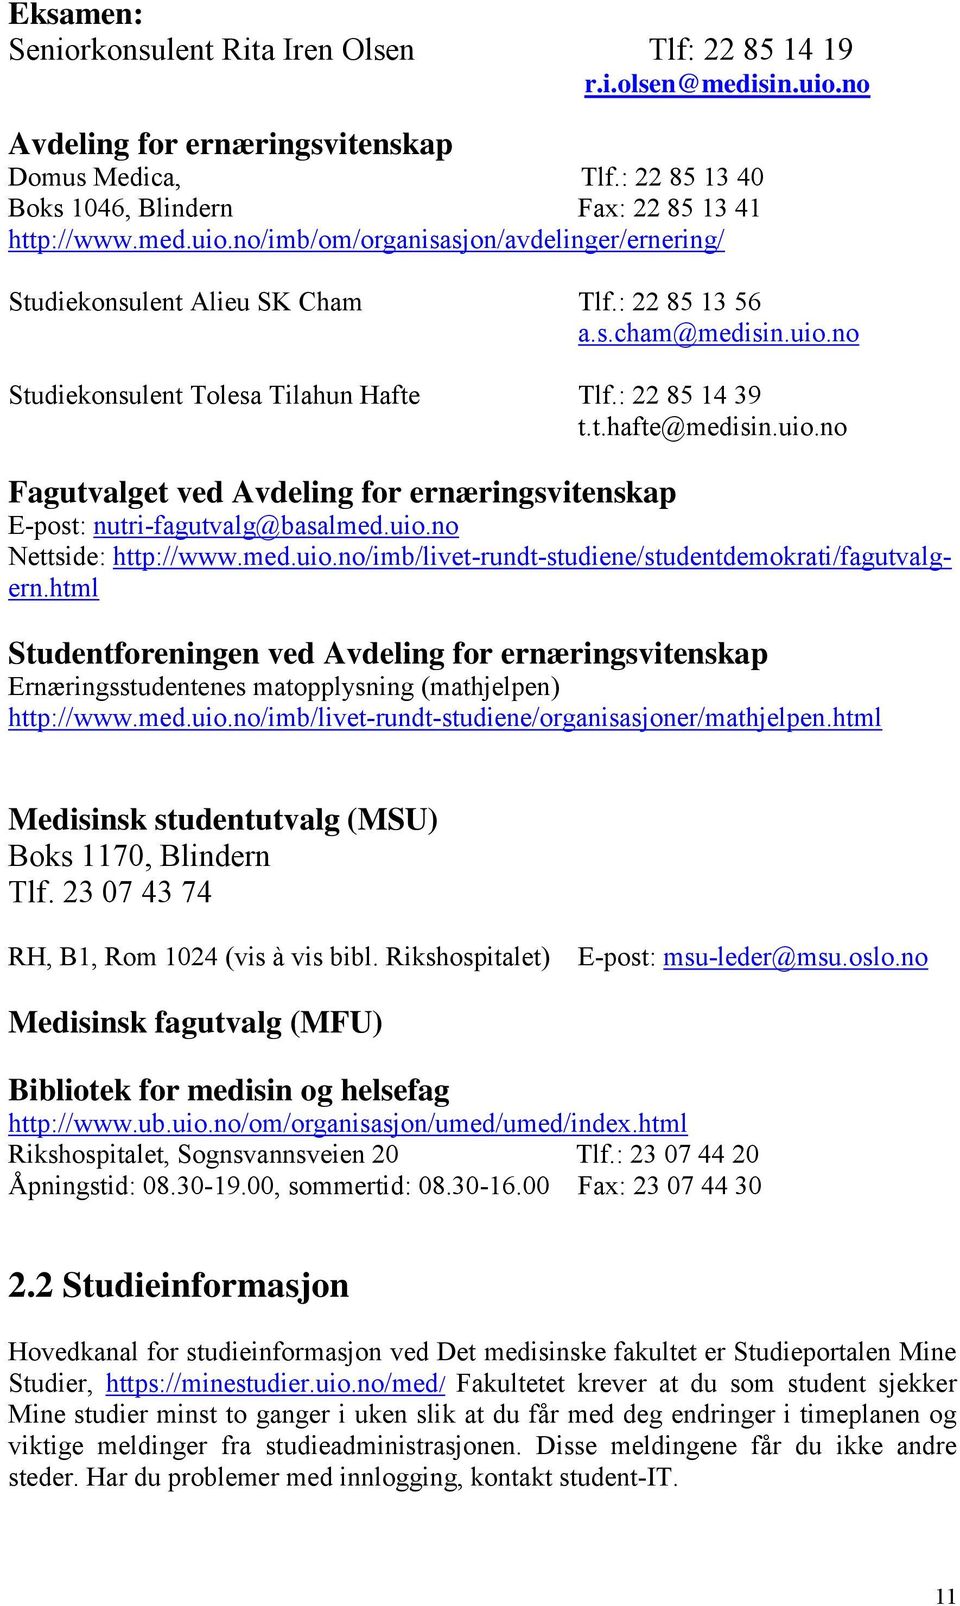 uio.no Nettside: http://www.med.uio.no/imb/livet-rundt-studiene/studentdemokrati/fagutvalgern.